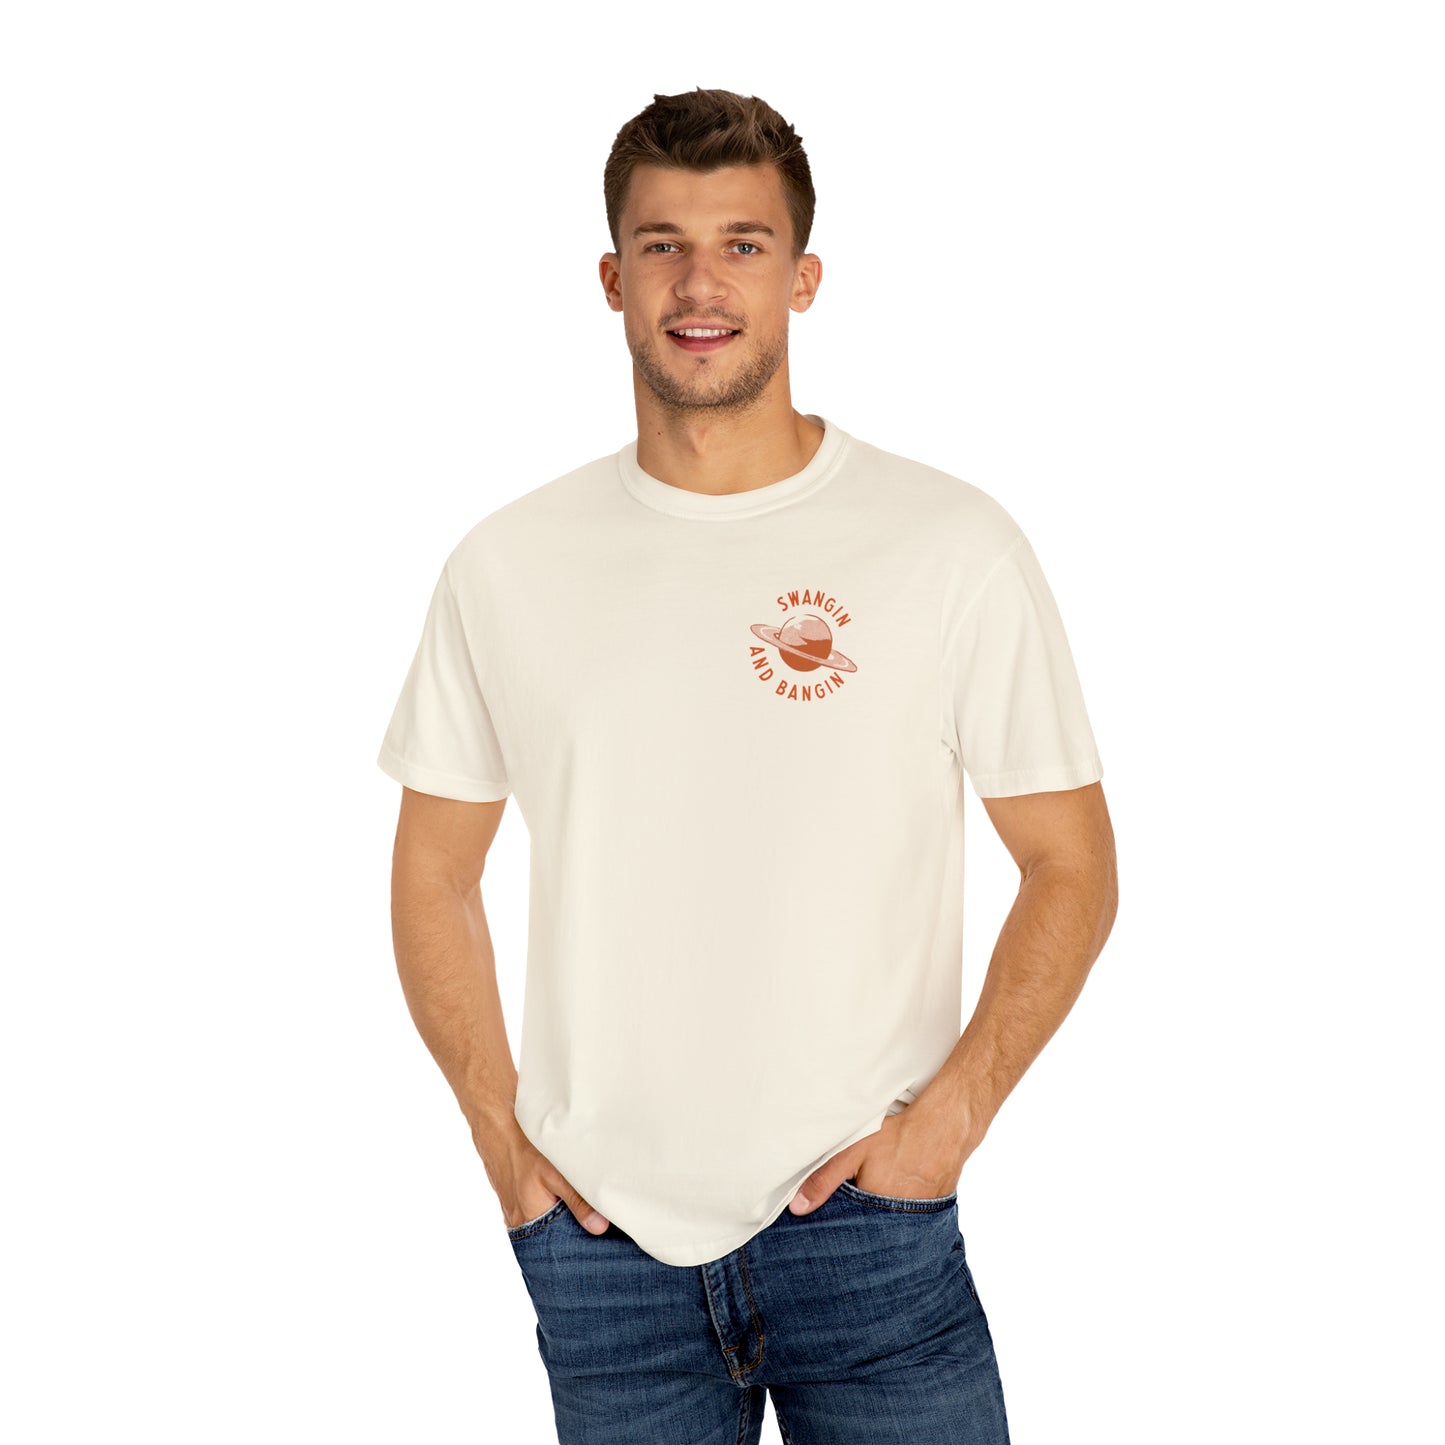 Swangin & Bangin (Saturn) Unisex Comfort Colors T-shirt